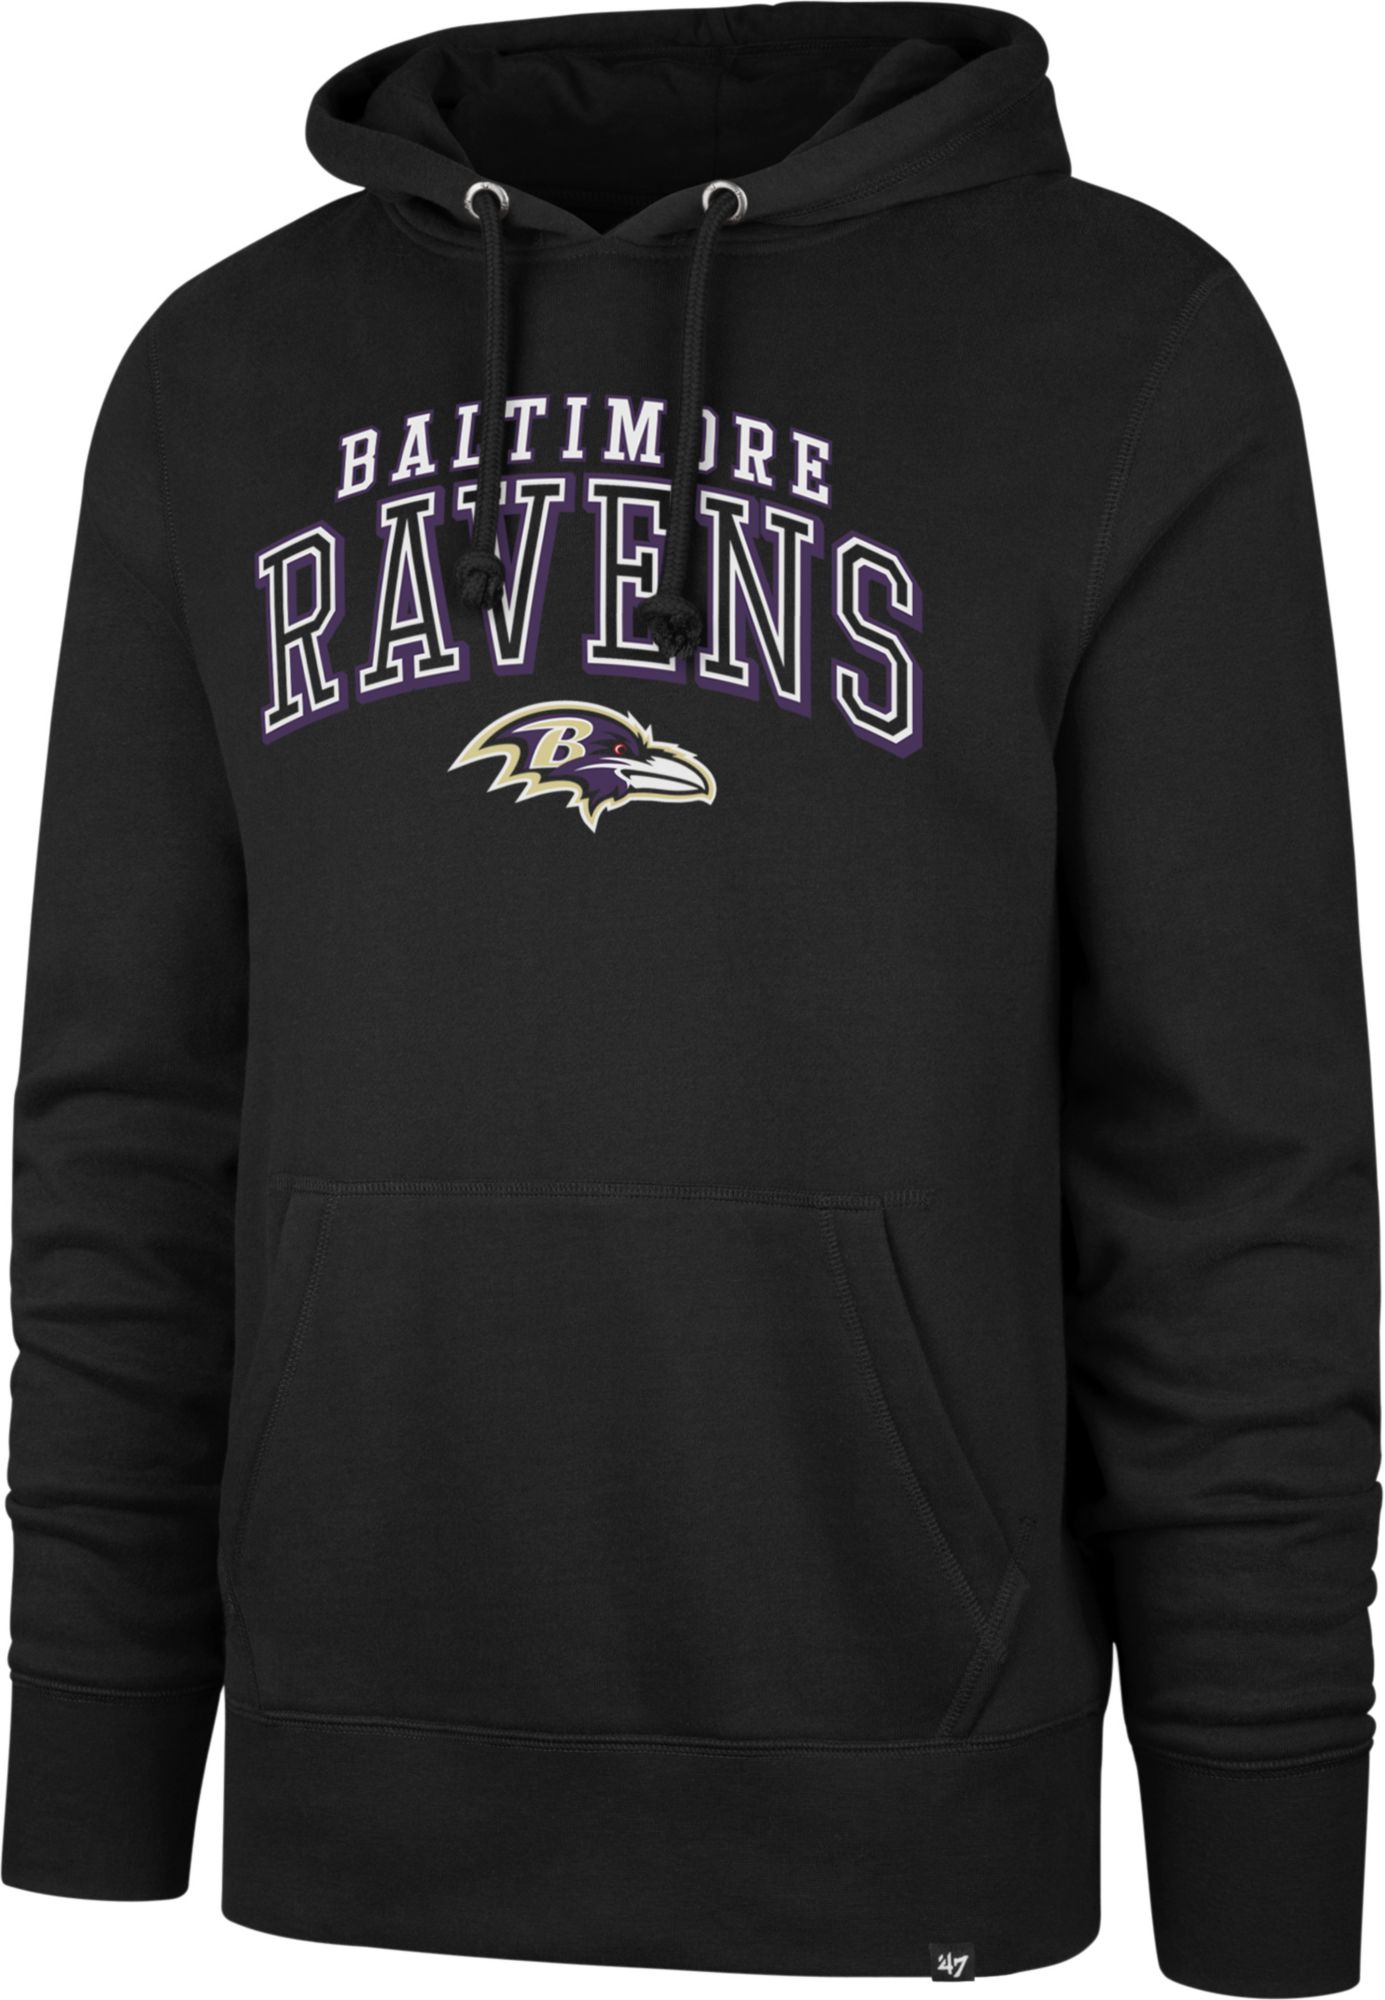 baltimore ravens pullover hoodie